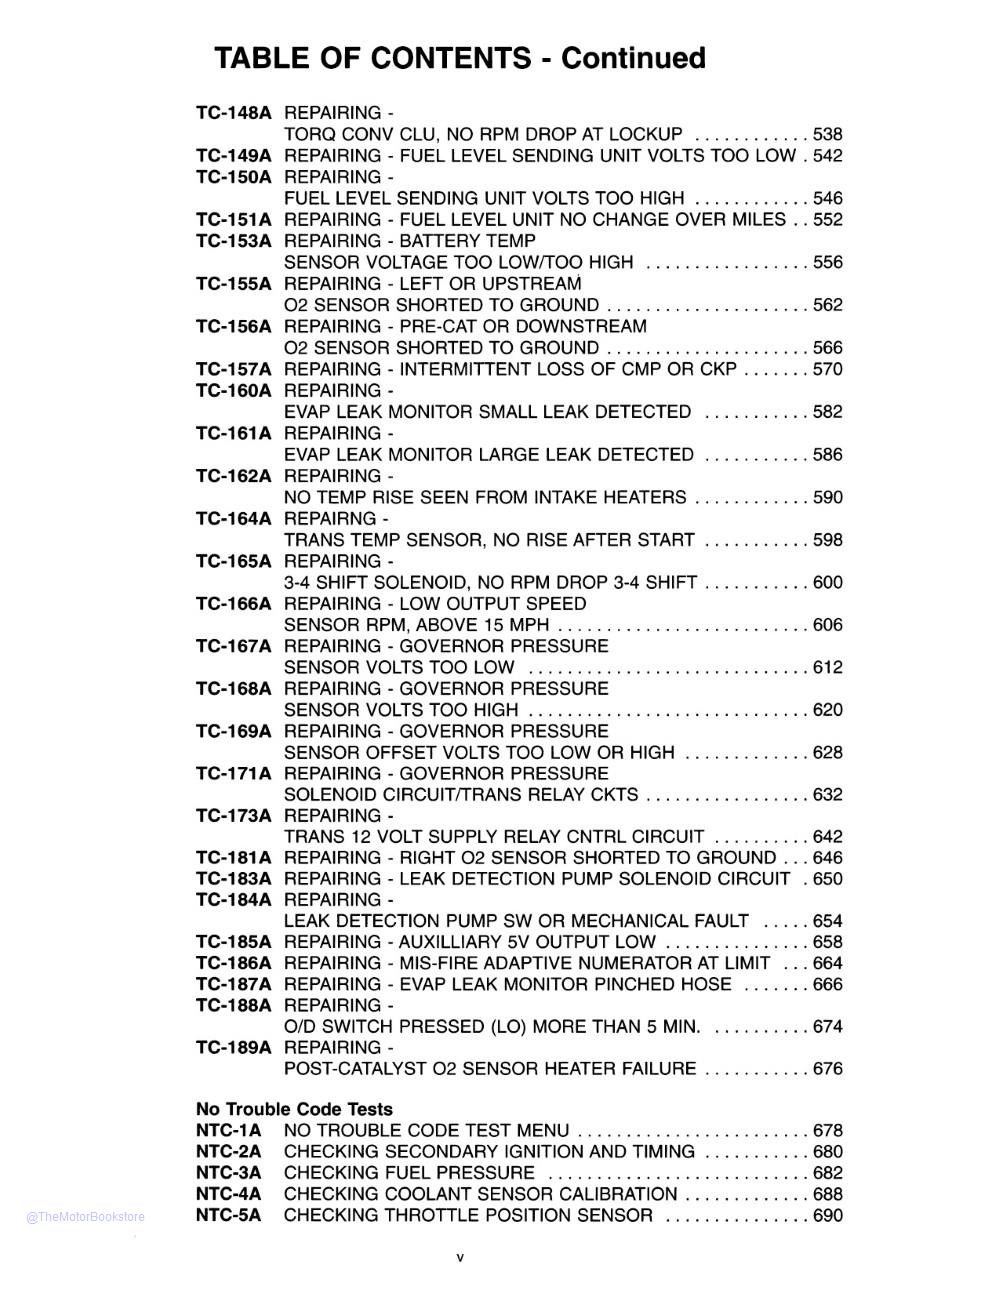 1996-1997 Dodge Truck Powertrain Diagnostic Procedures Manual  - Table of Contents 5